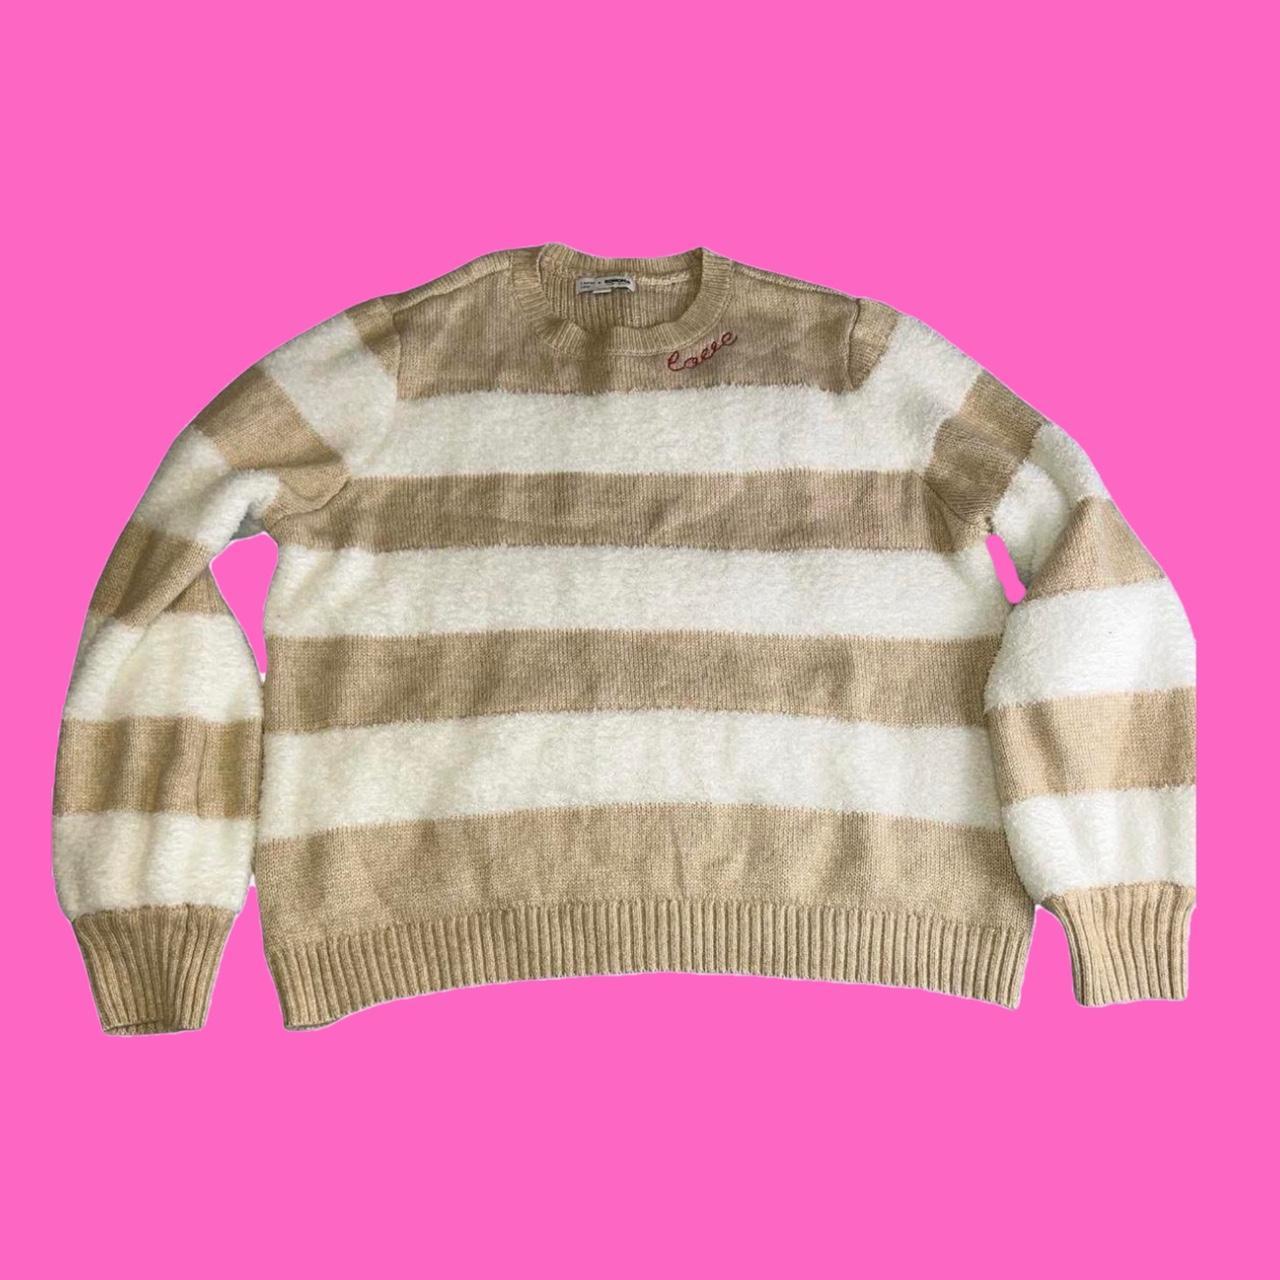 Lauren lane x Sonoma Fuzzy “love” Sweater there is... - Depop